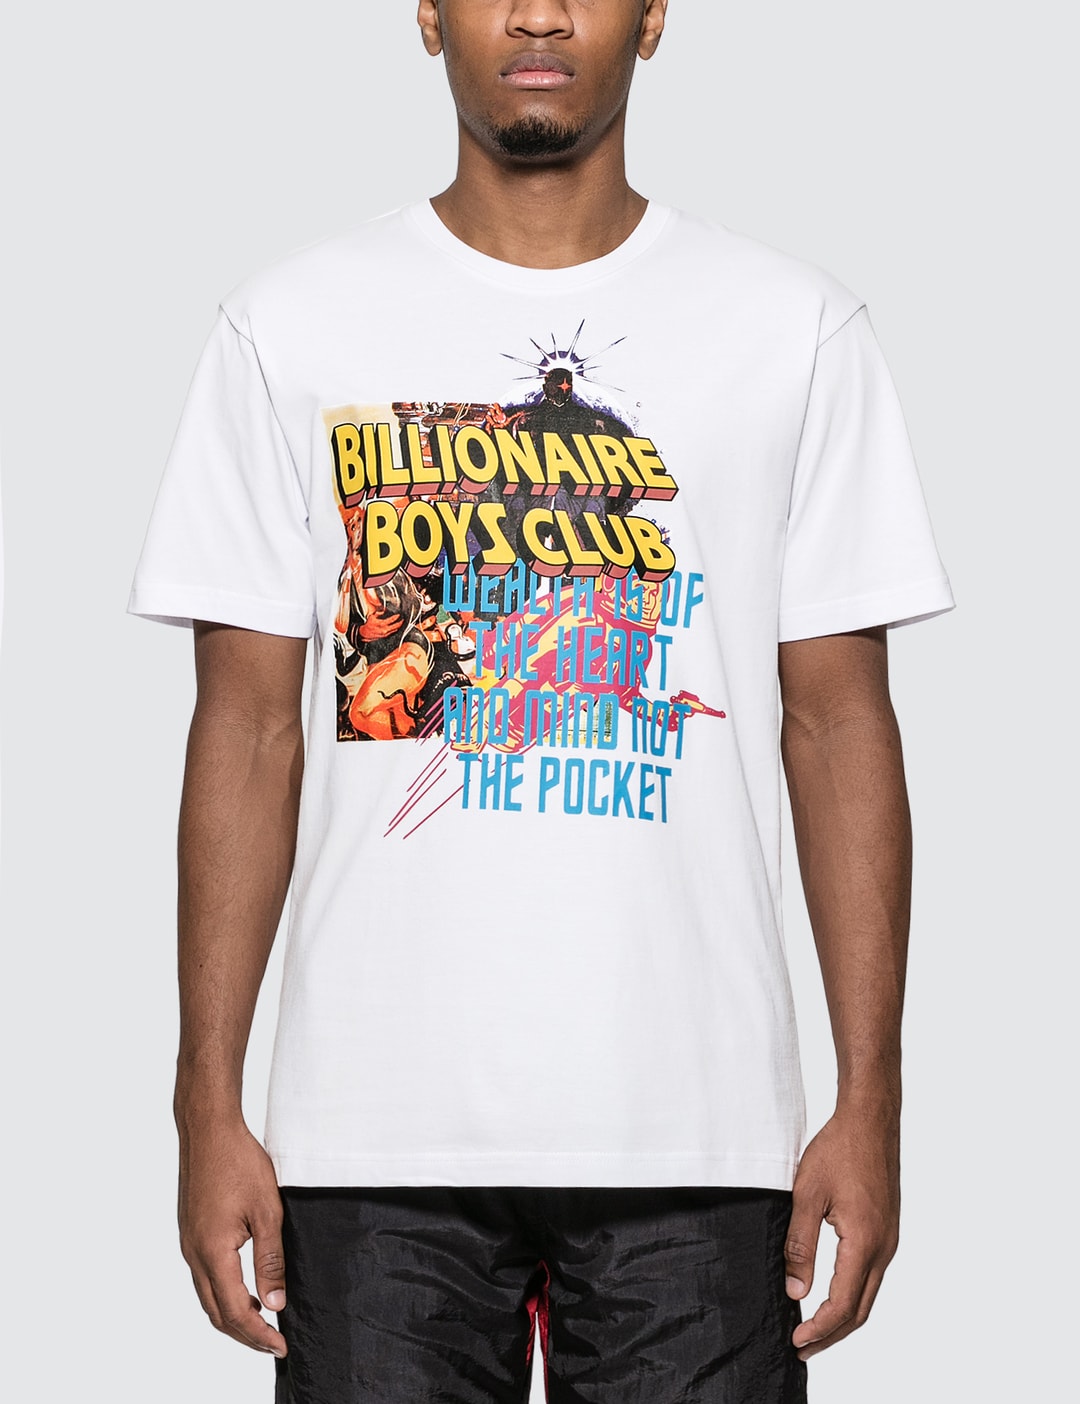 Mince Rastløs lys pære Billionaire Boys Club - BBC Graphic T-shirt | HBX -  ハイプビースト(Hypebeast)が厳選したグローバルファッション&ライフスタイル